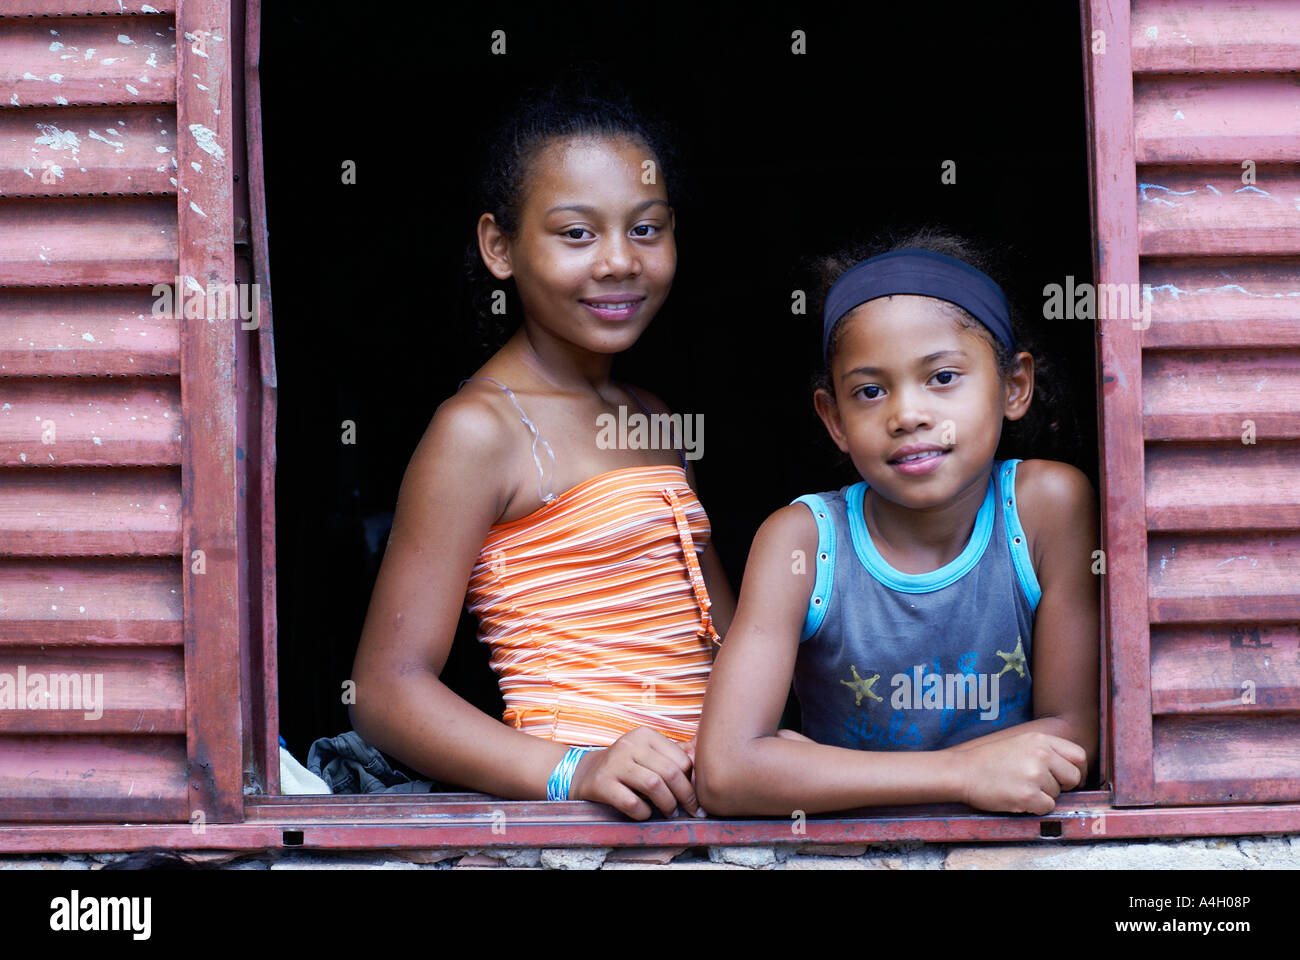 Brazilian girls in a window frame, Taubate, Sao Paulo, Brazil Stock Photo